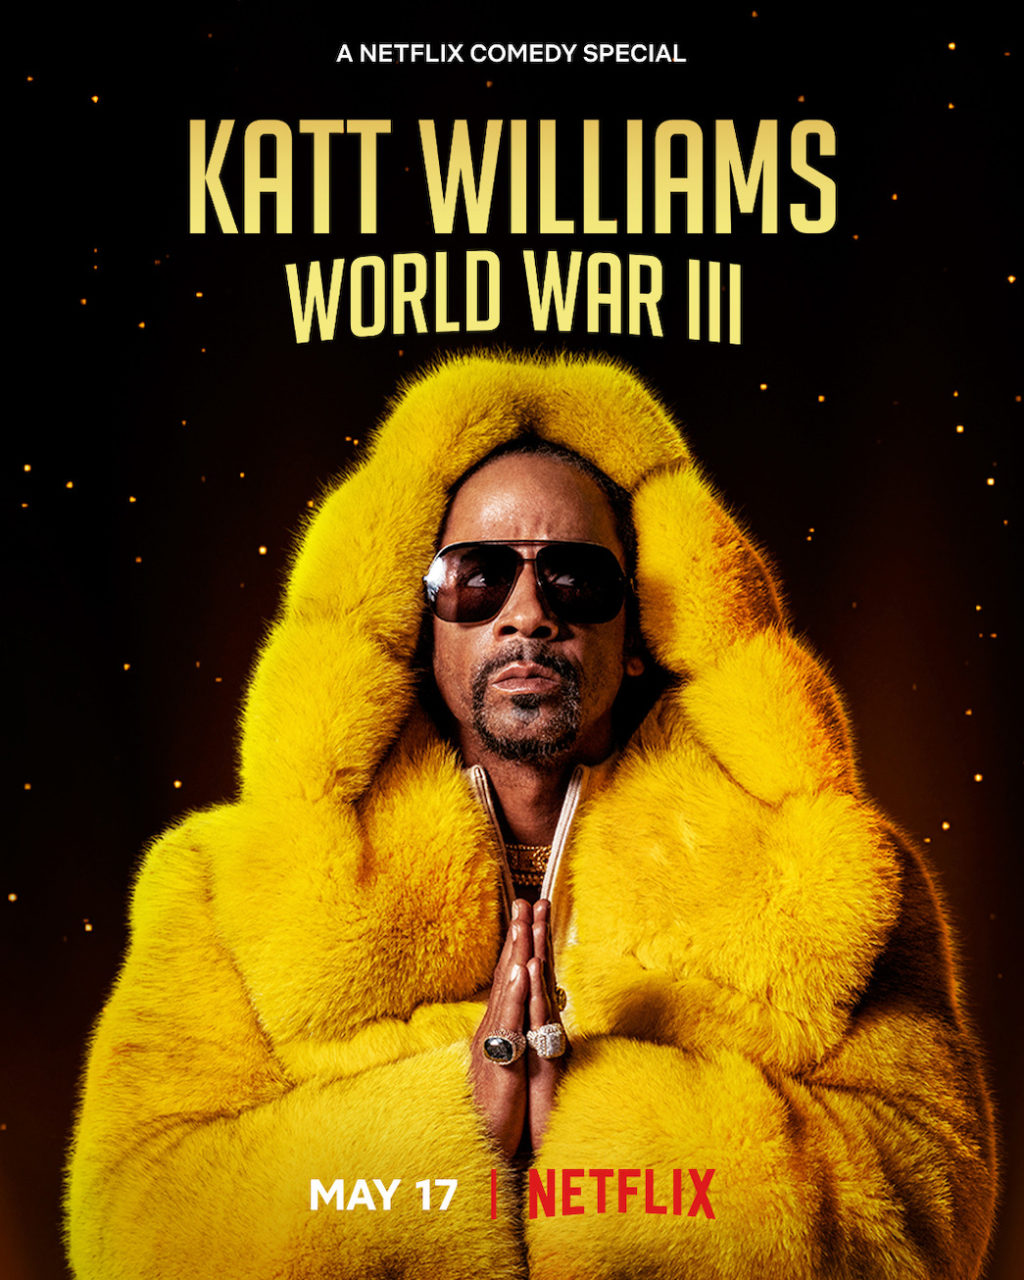 Katt Williams: World War III poster (Netflix)